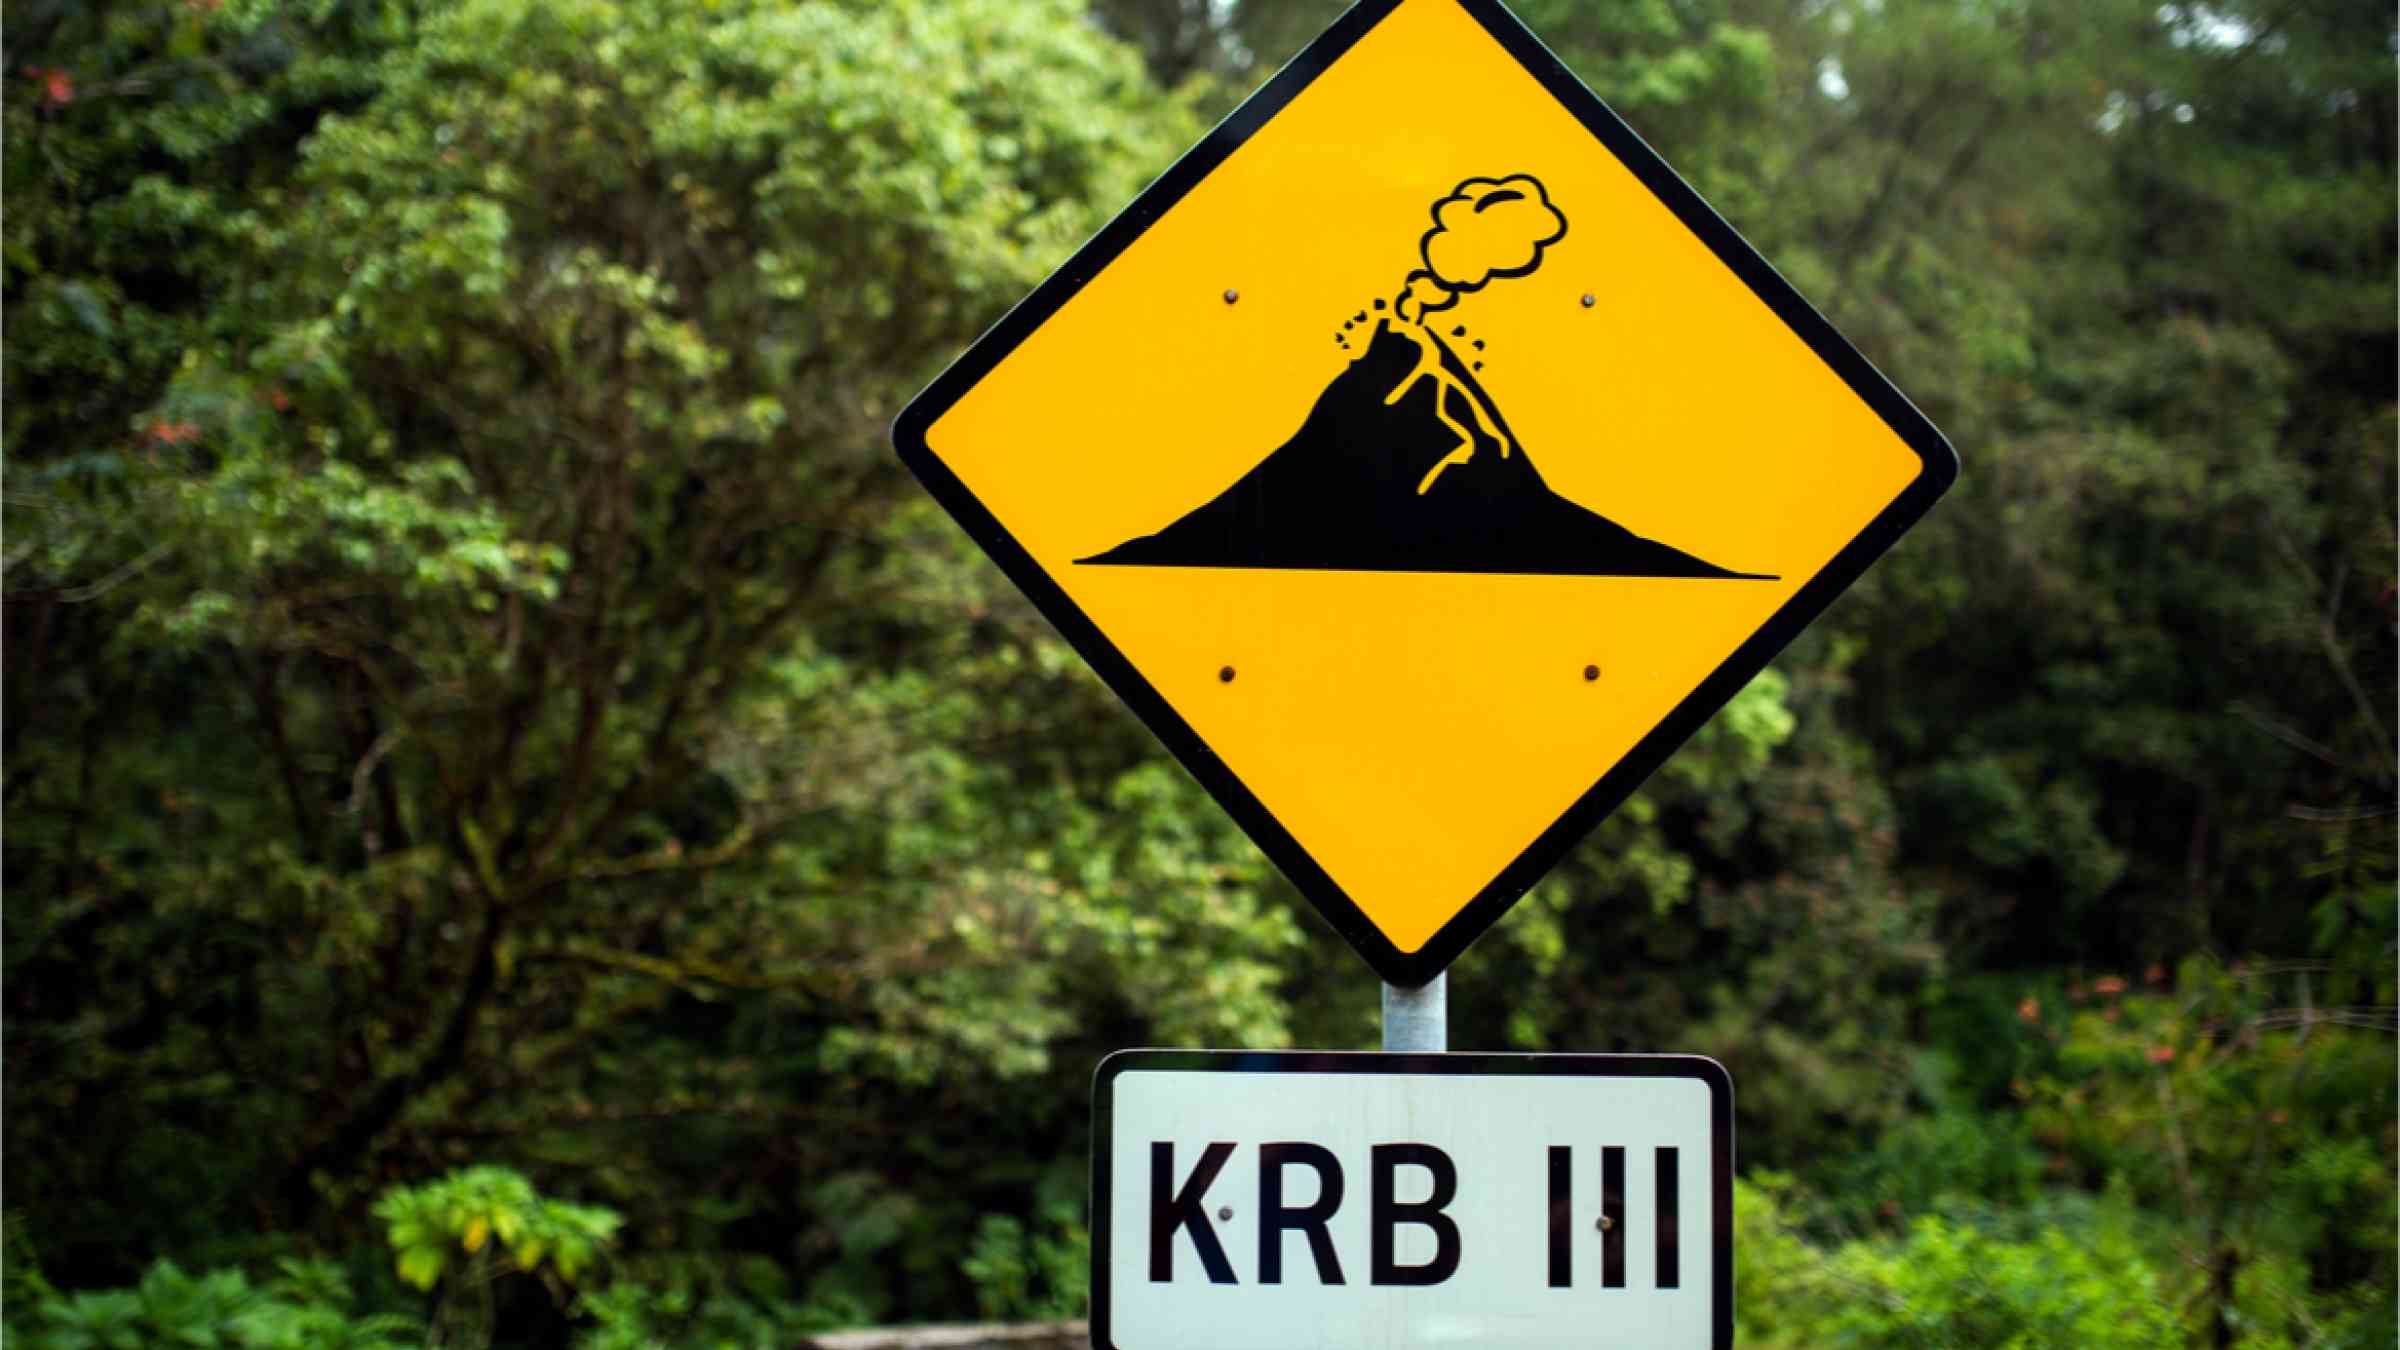 Thi image shows a volcano warning street sign.